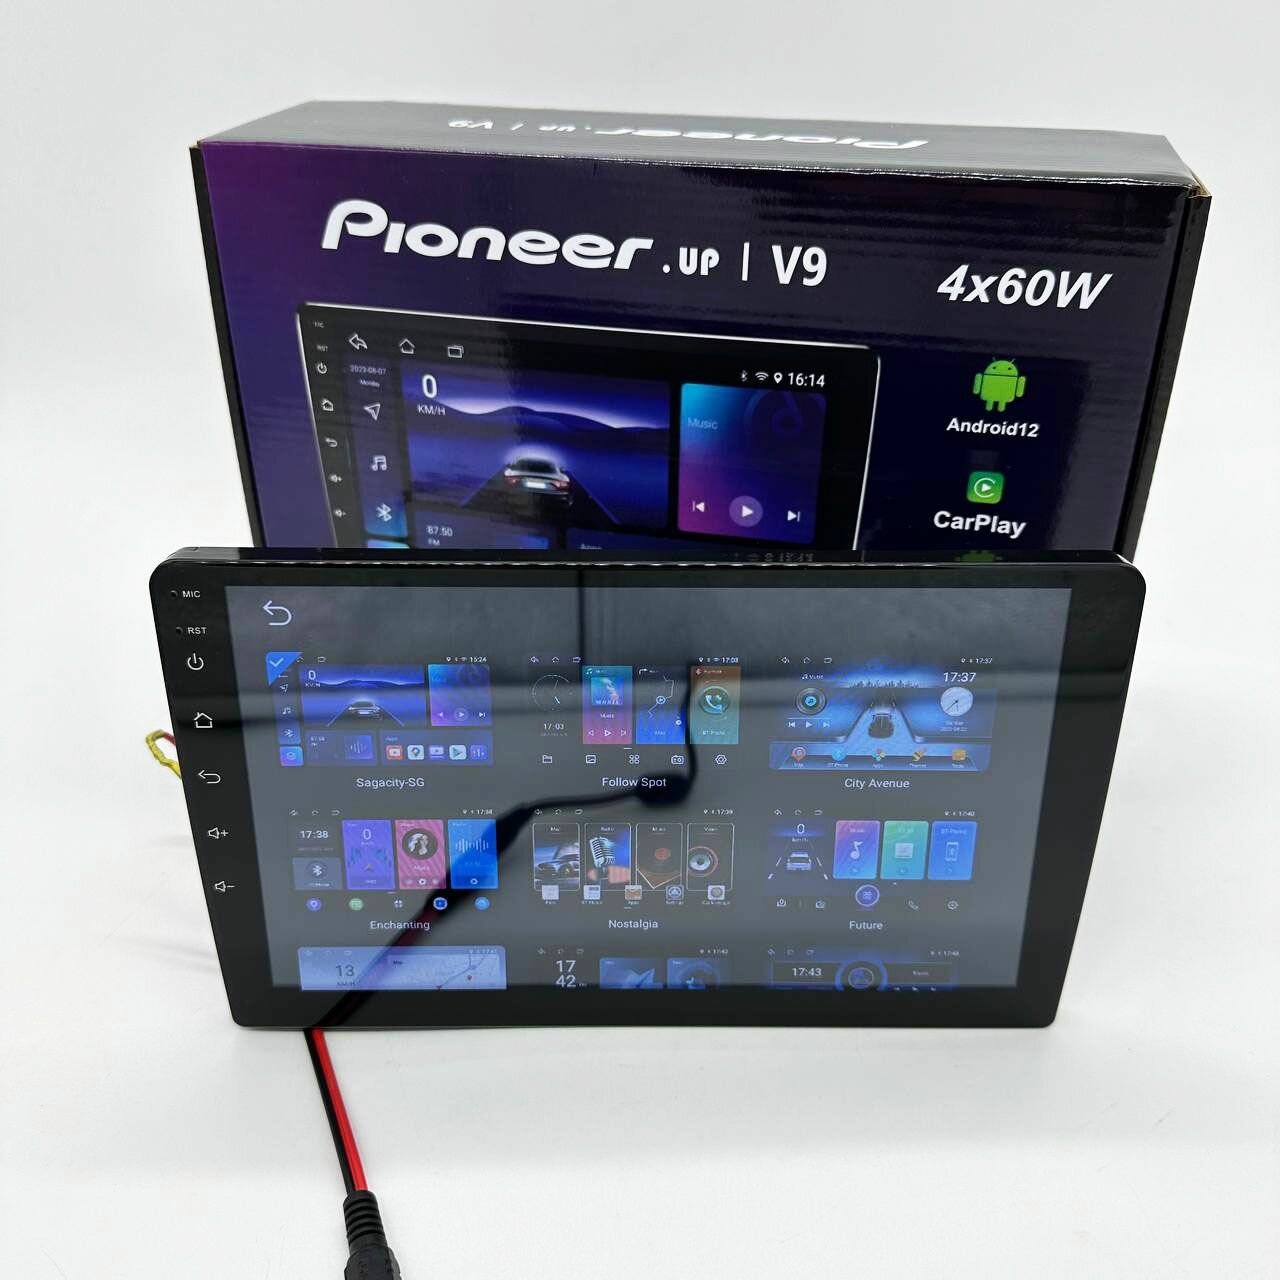 Автомагнитола универсальная Android Pioneer.up (9", 2/32 Гб, CarPlay, Wi-Fi, GPS, Bluetooth)